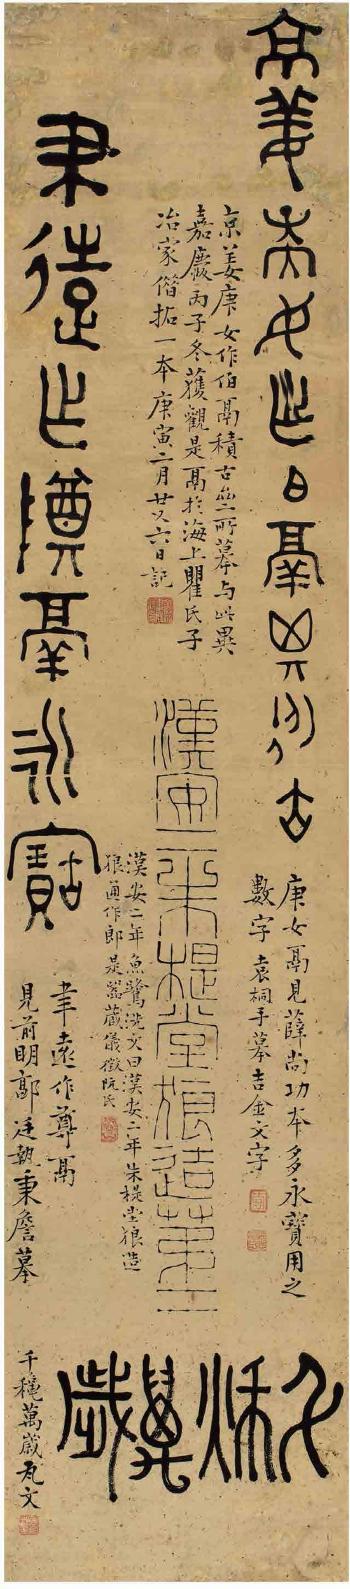 Calligraphy by 
																	 Yuan Tong